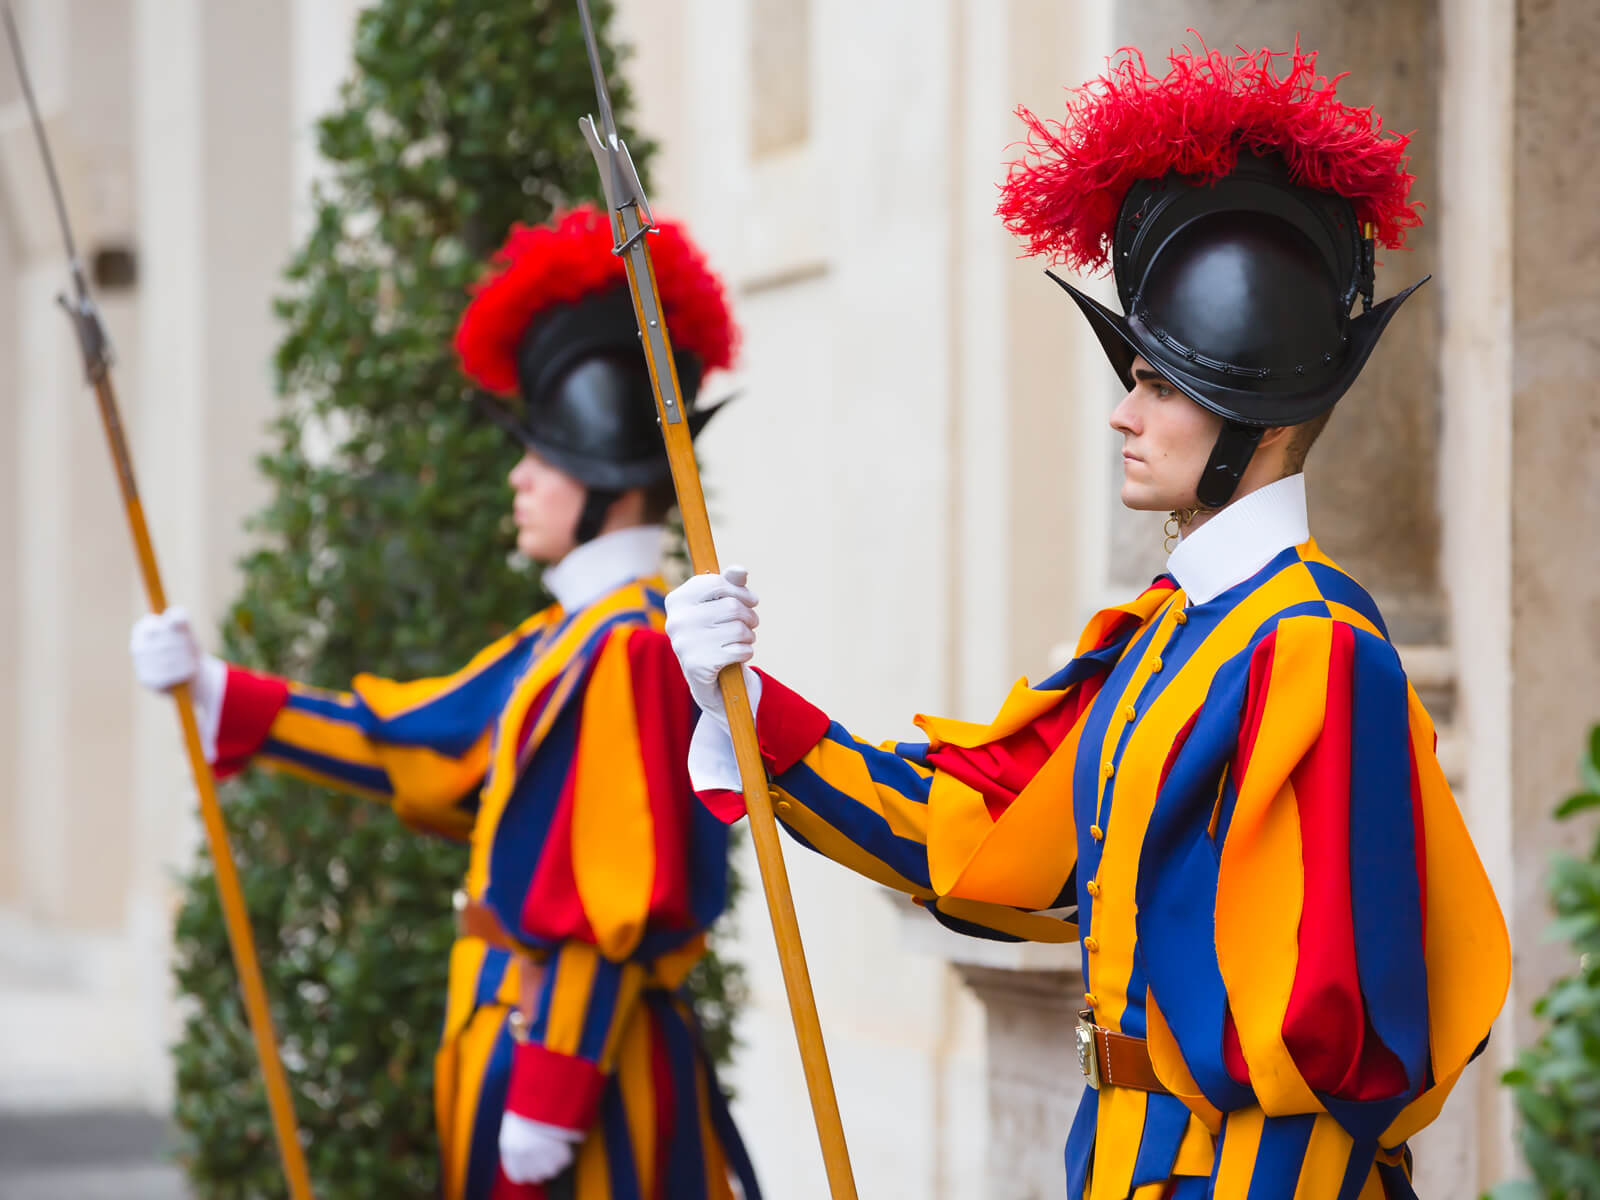 Papal-Swiss-Guard-Uniforms-04.jpg